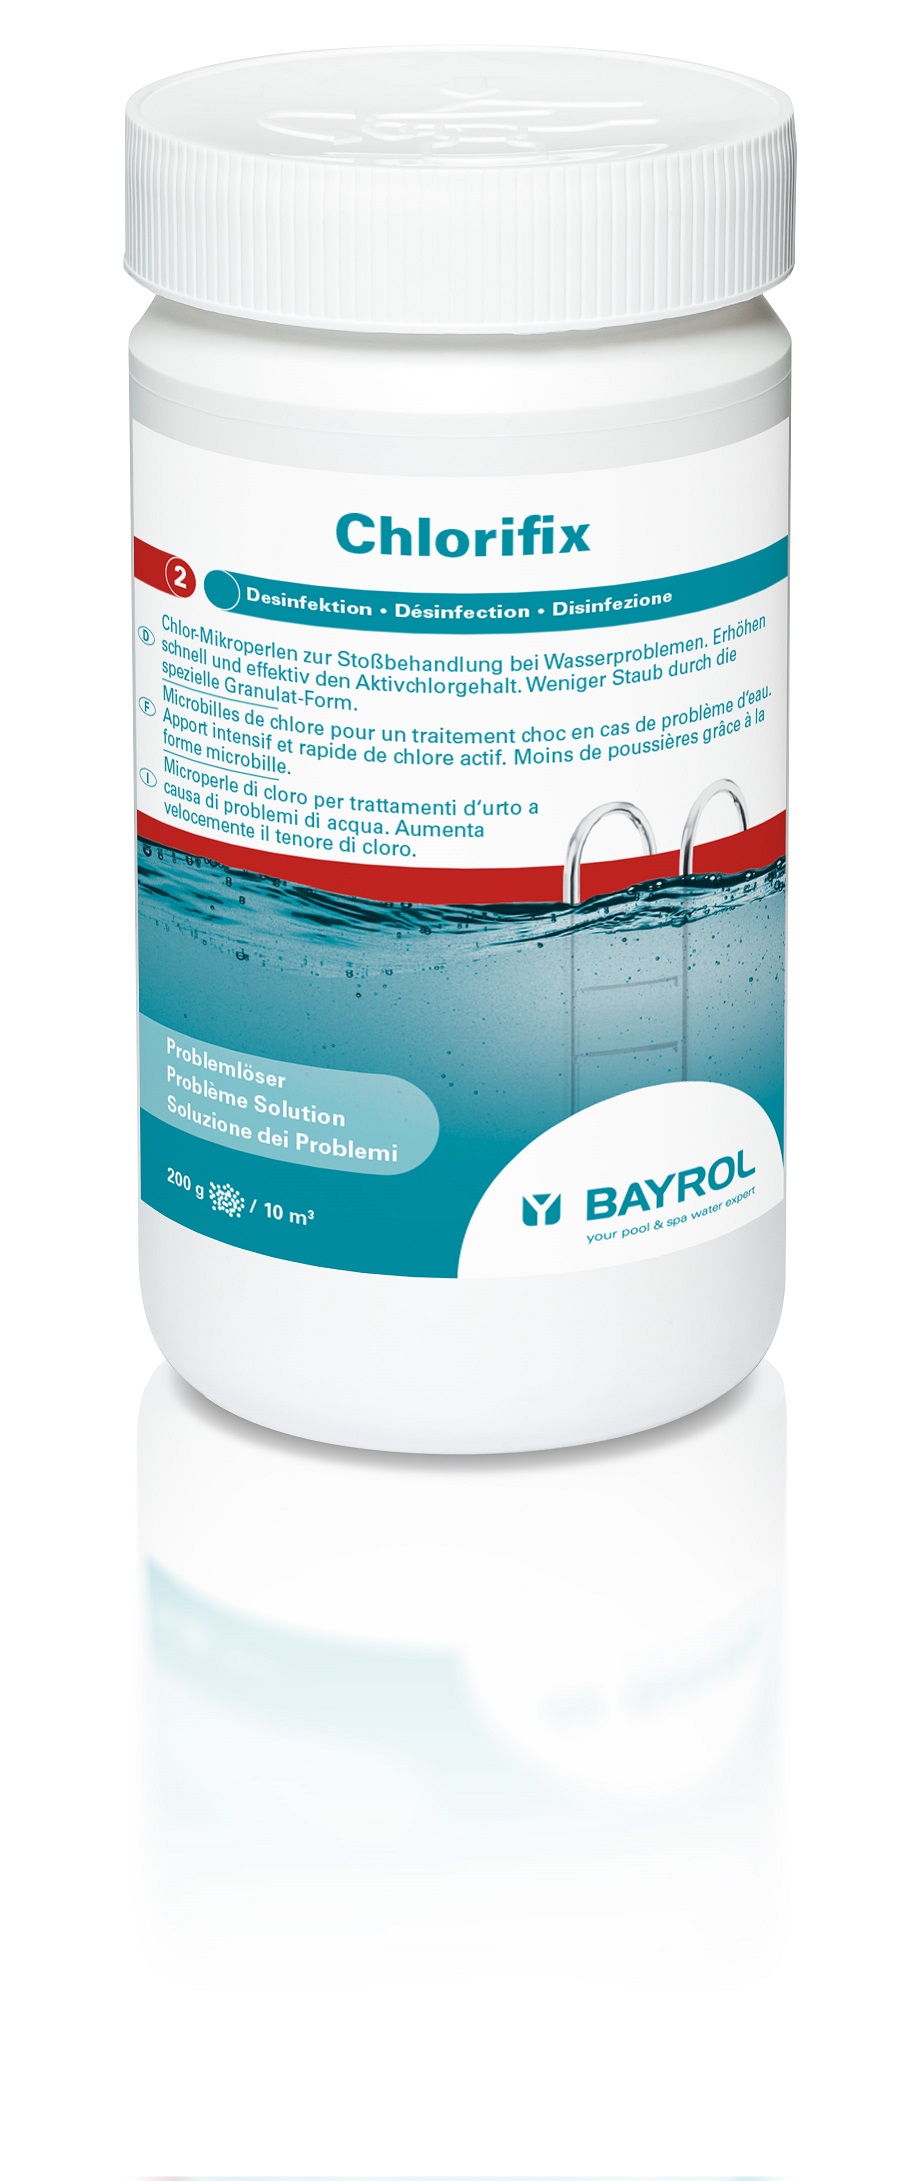 AS-021022 Chlorifix 1kg schnellösliches Chlorgranulat hochwertiges Chlorgranulat zur Stoßbehandlung